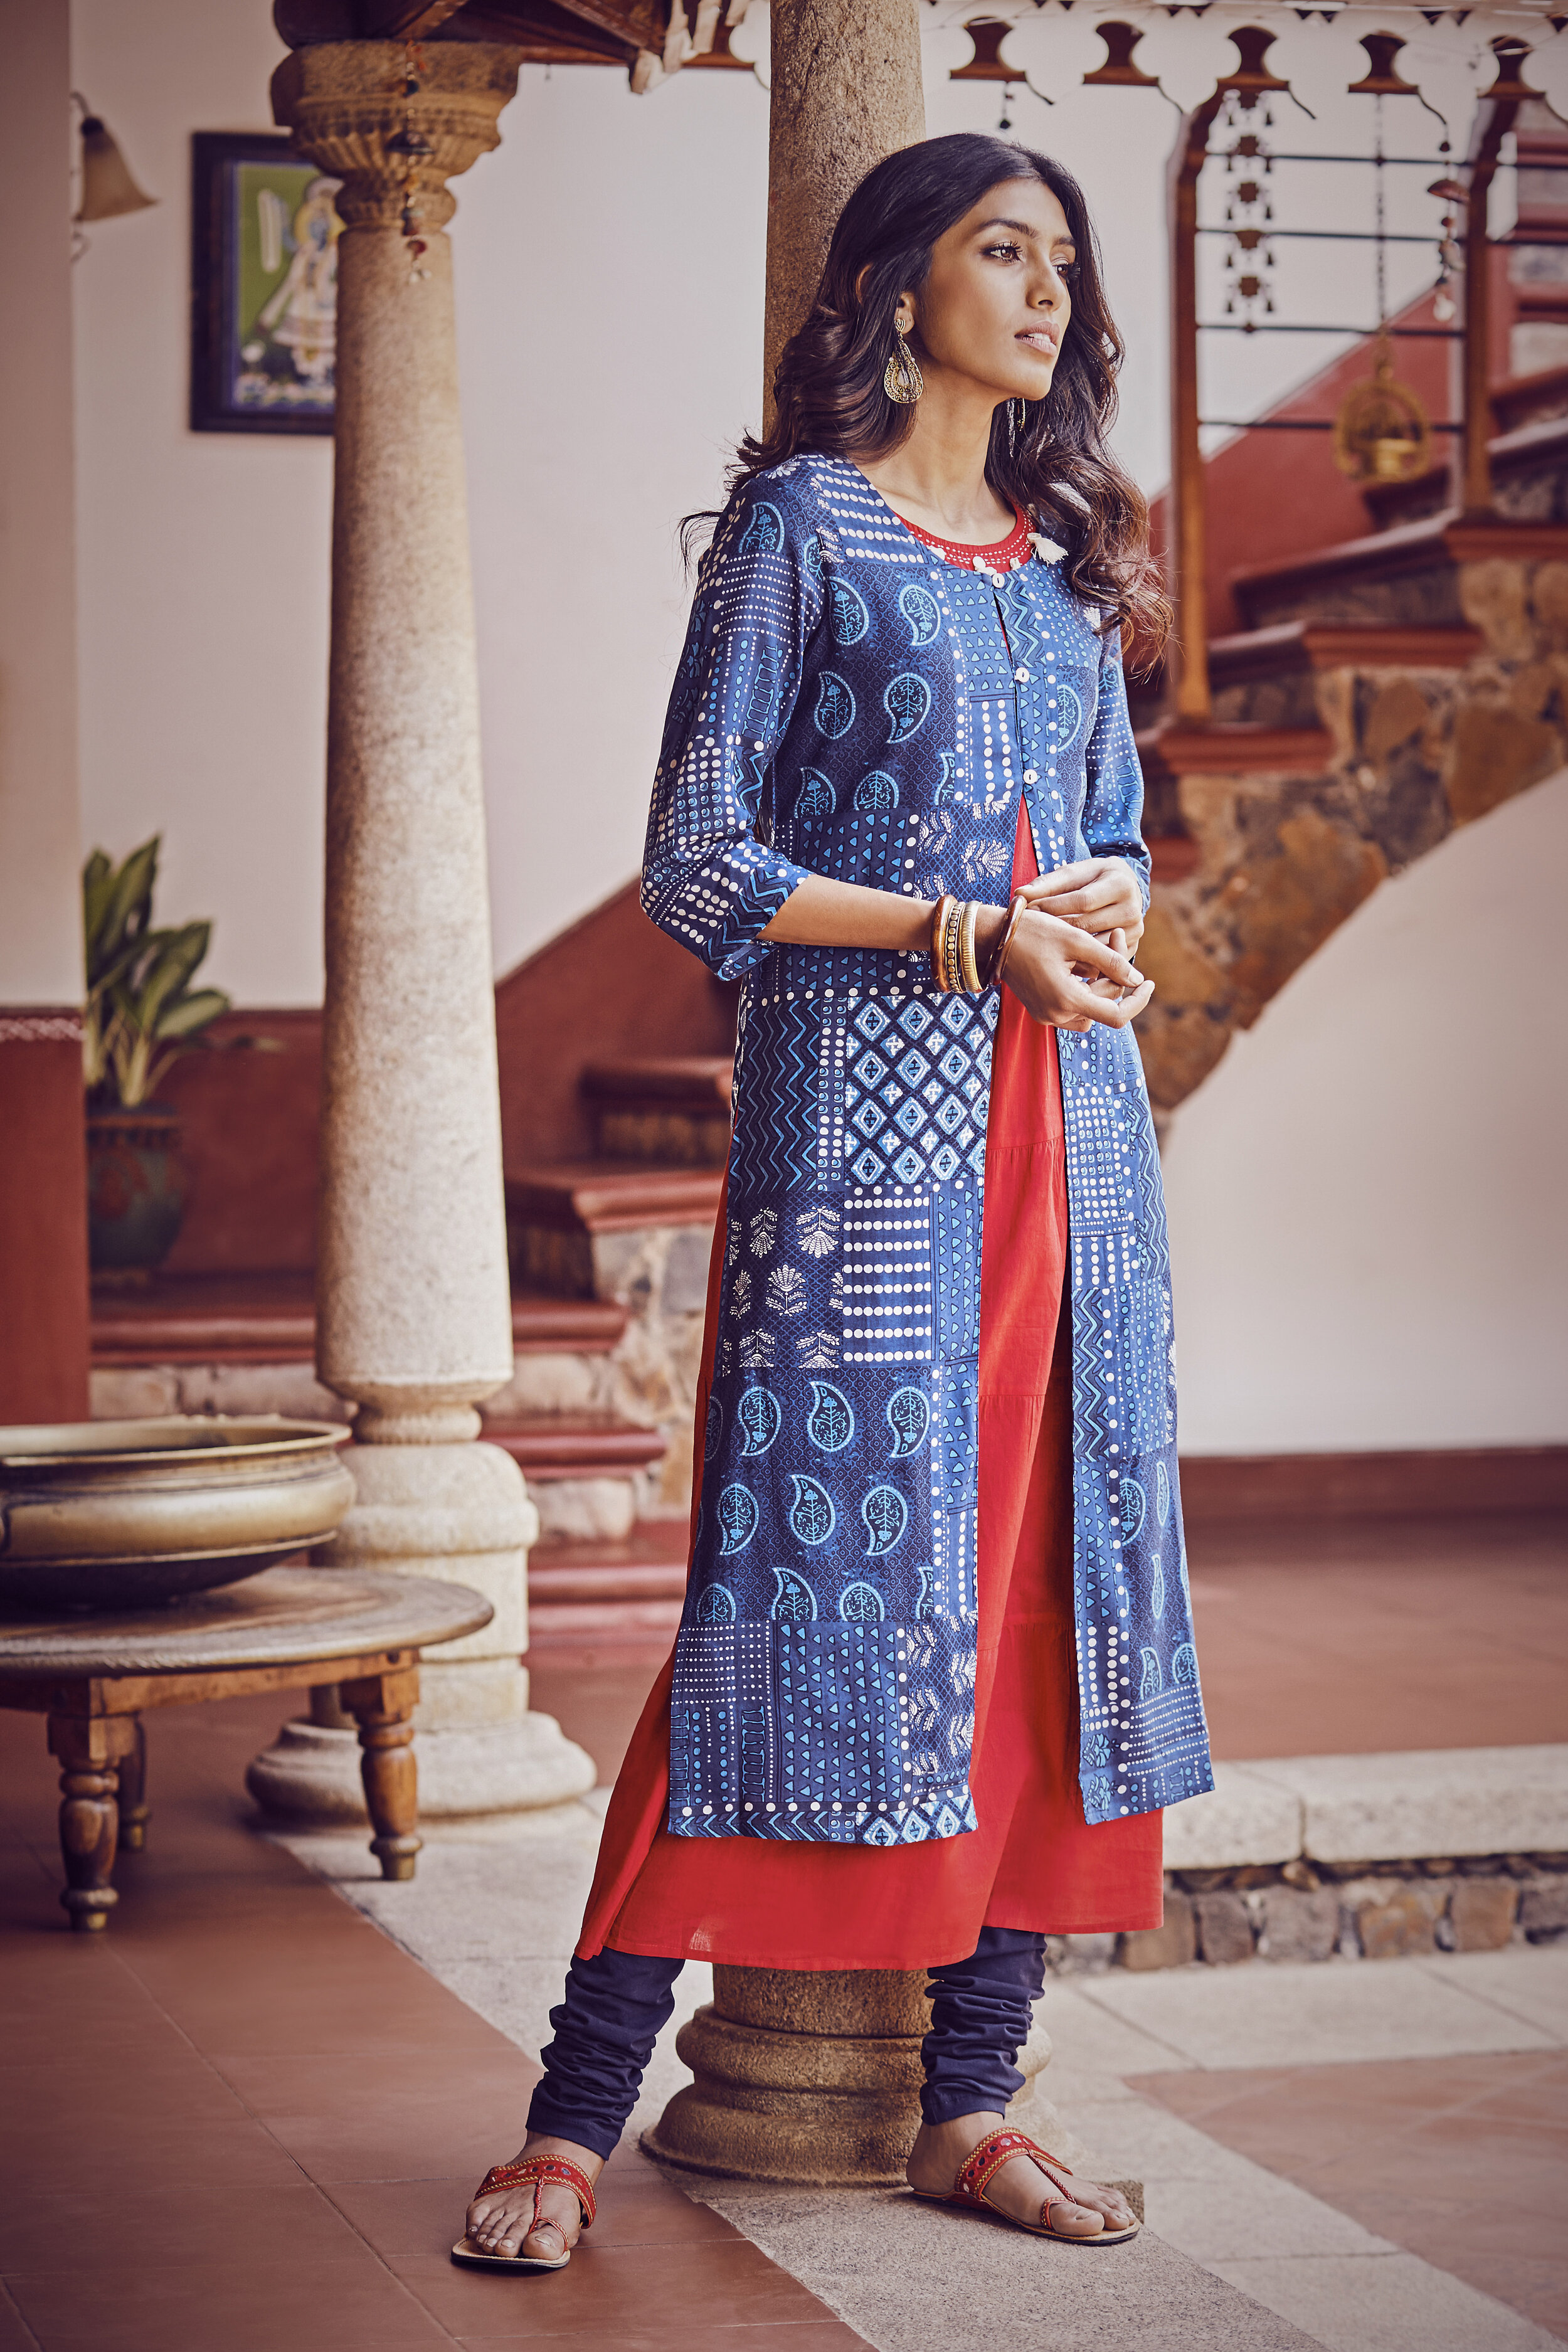 Khashti Lodhiyal - Reati store - Max Fashion India | LinkedIn